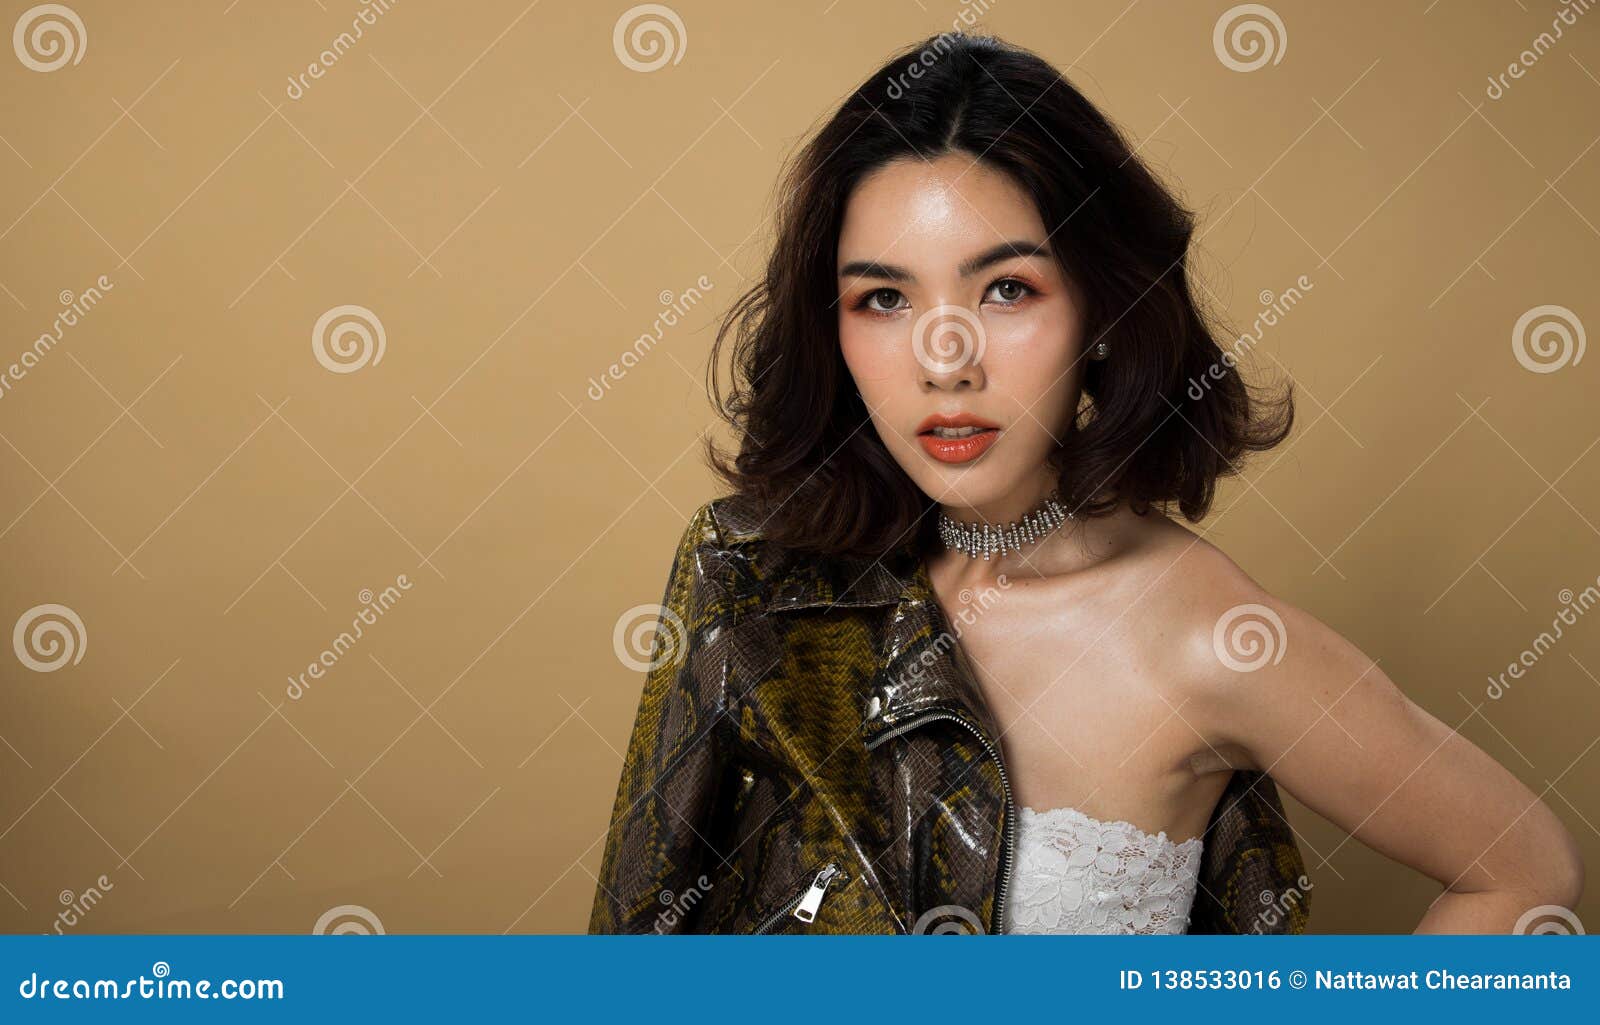 Fashion Asian Woman Tan Skin Black Hair Eyes Stock Photo